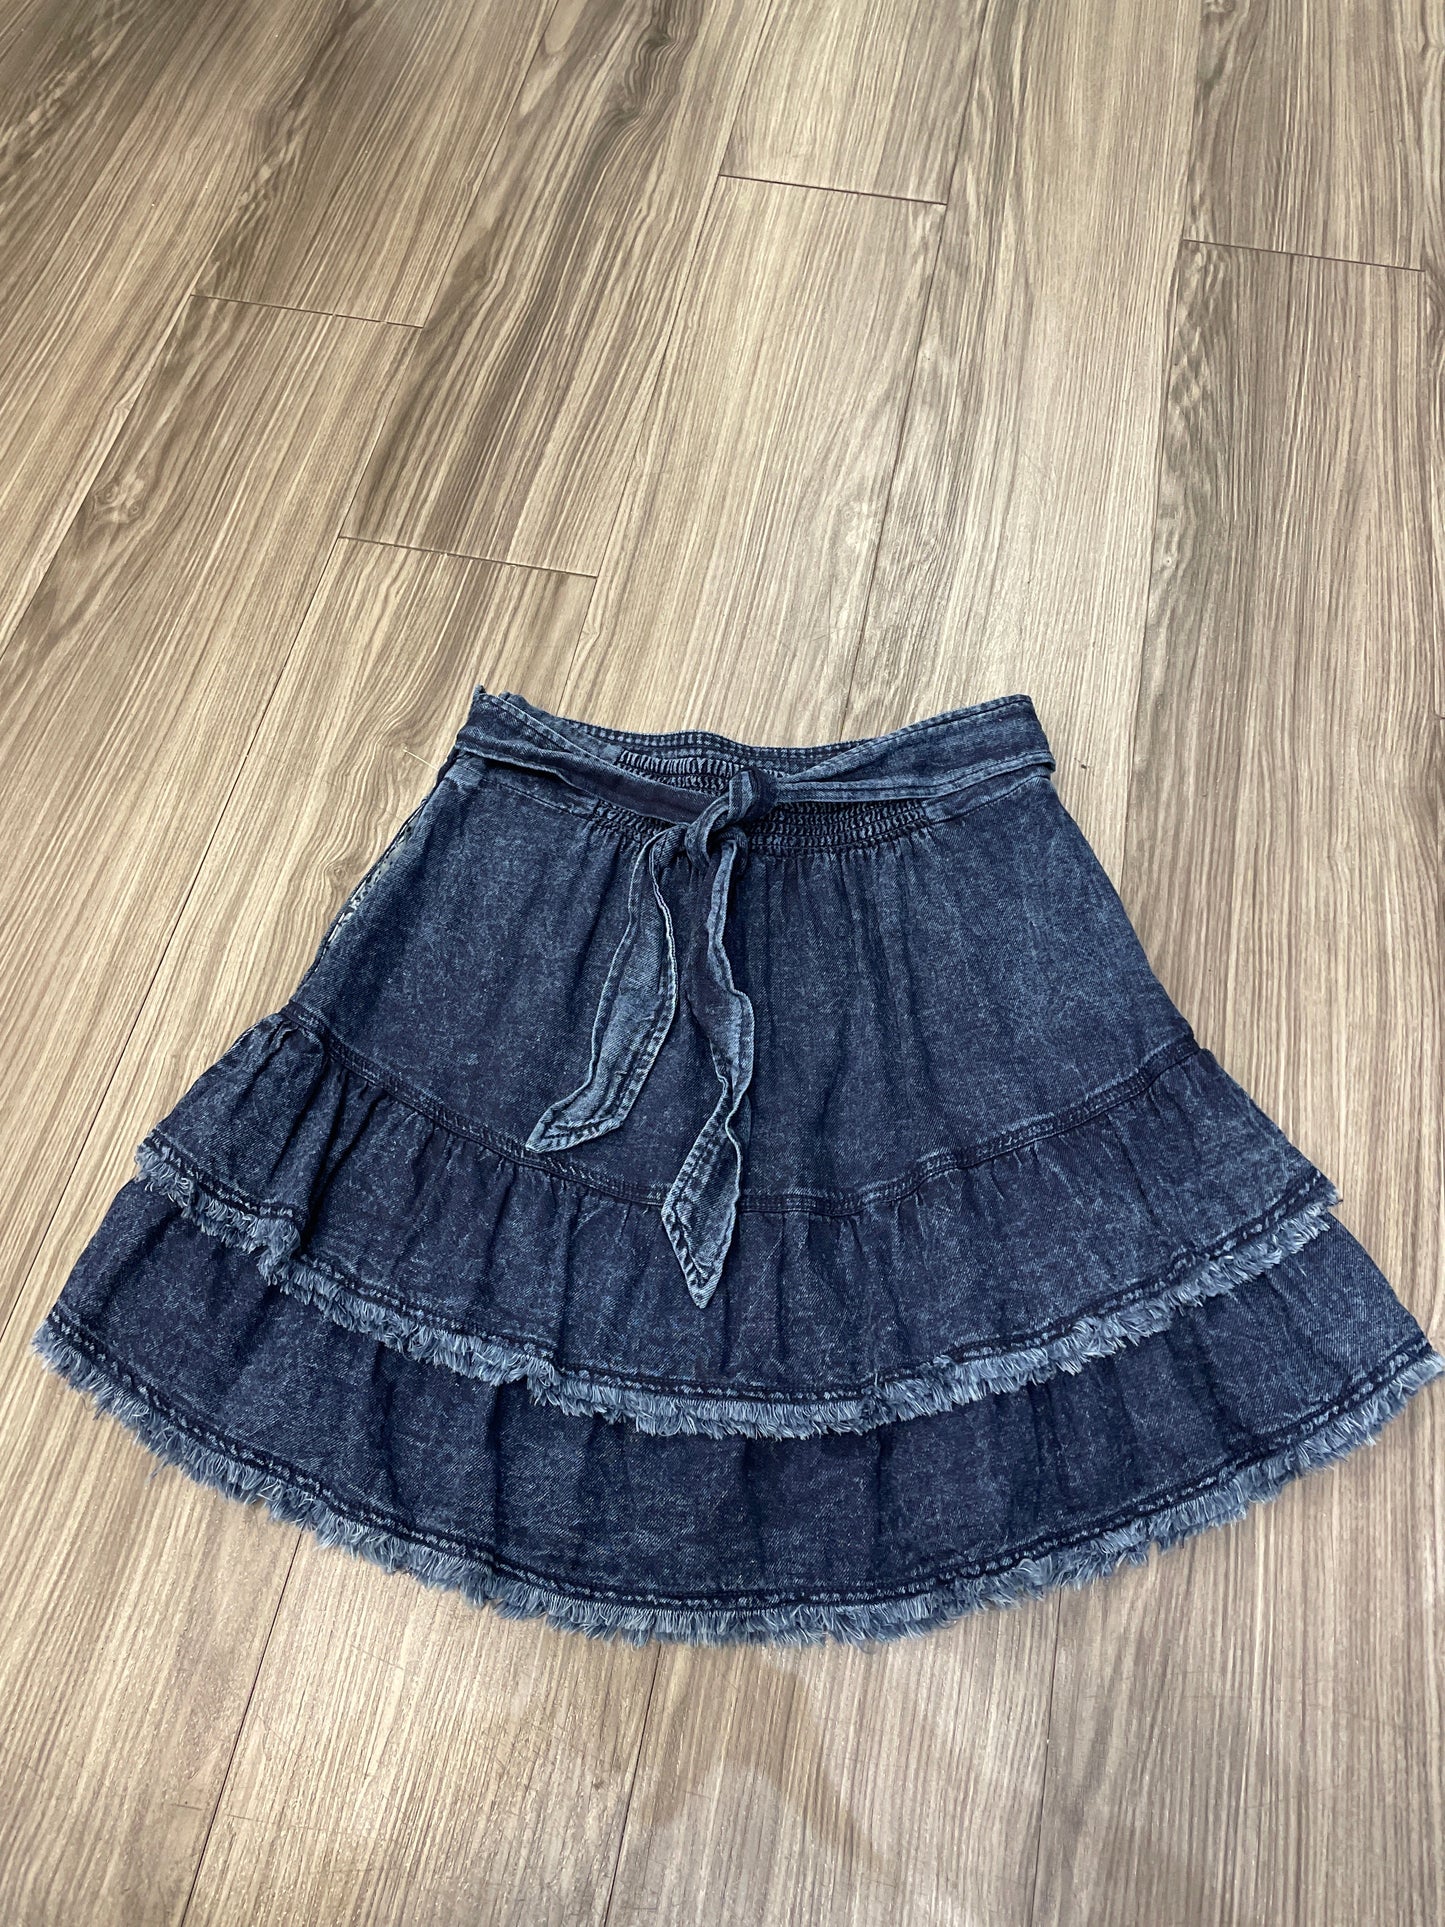 Skirt Mini & Short By Pilcro  Size: S